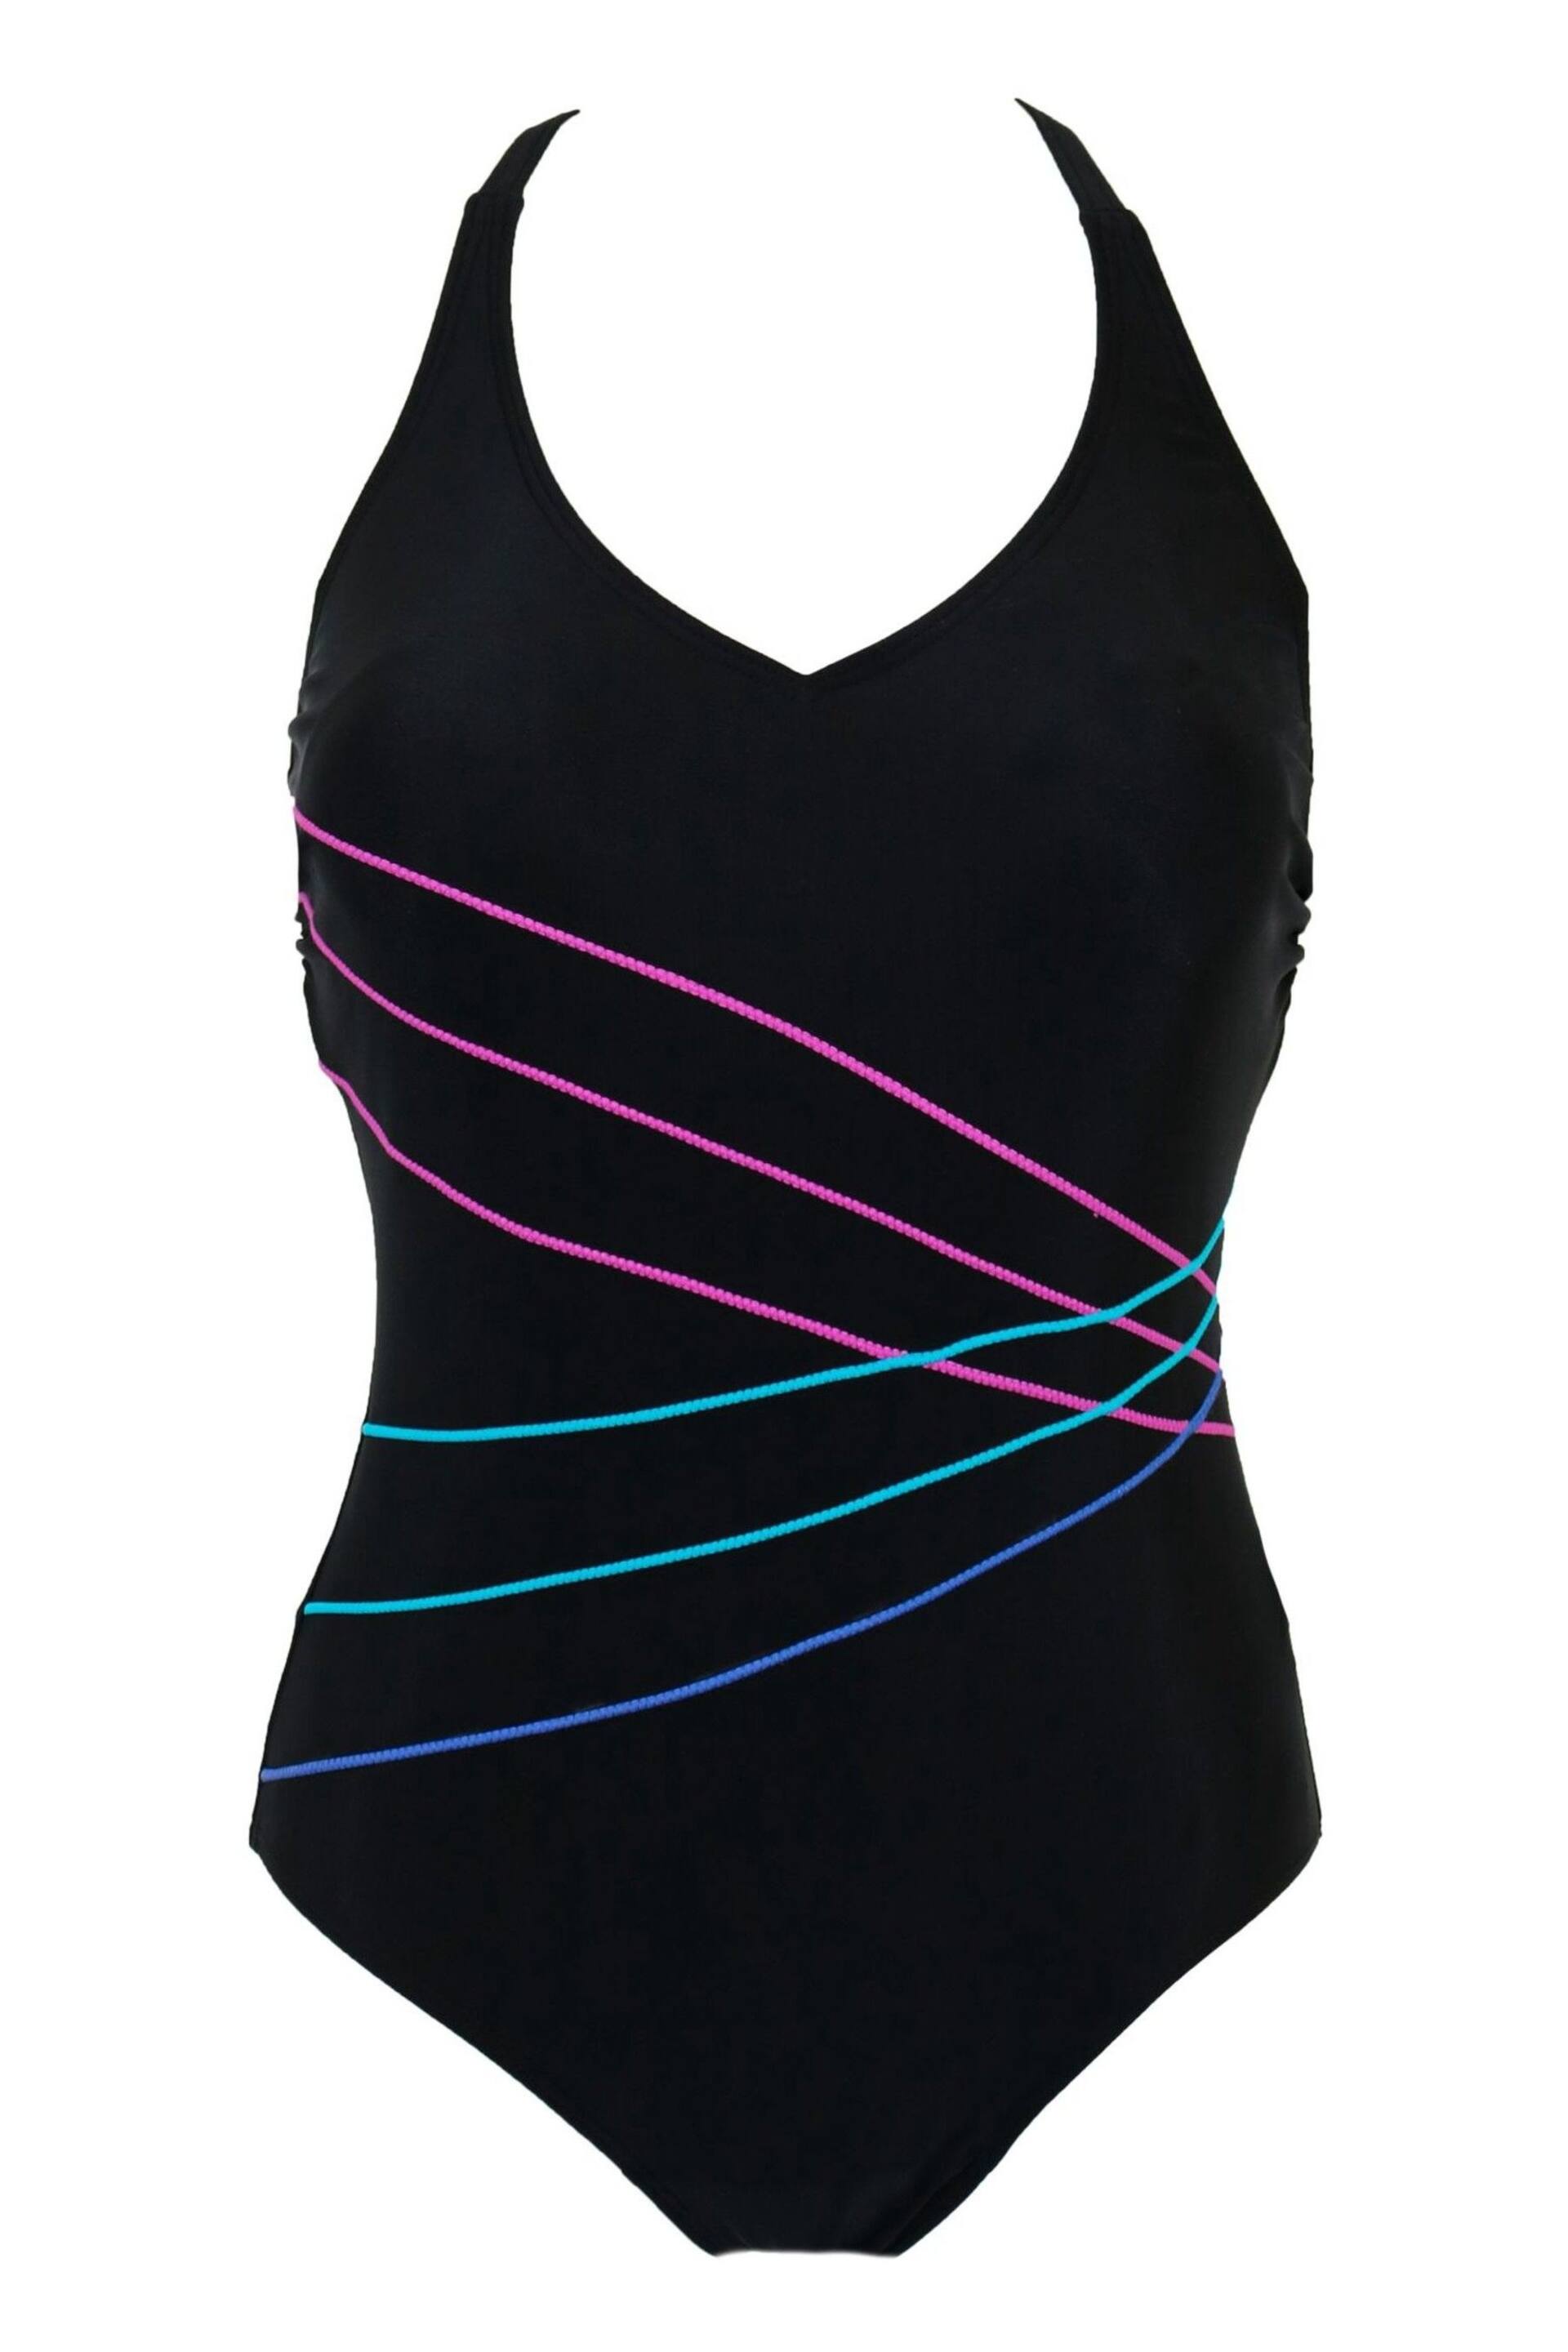 Pour Moi Black & Purple Energy Chlorine Swimsuit - Image 3 of 4